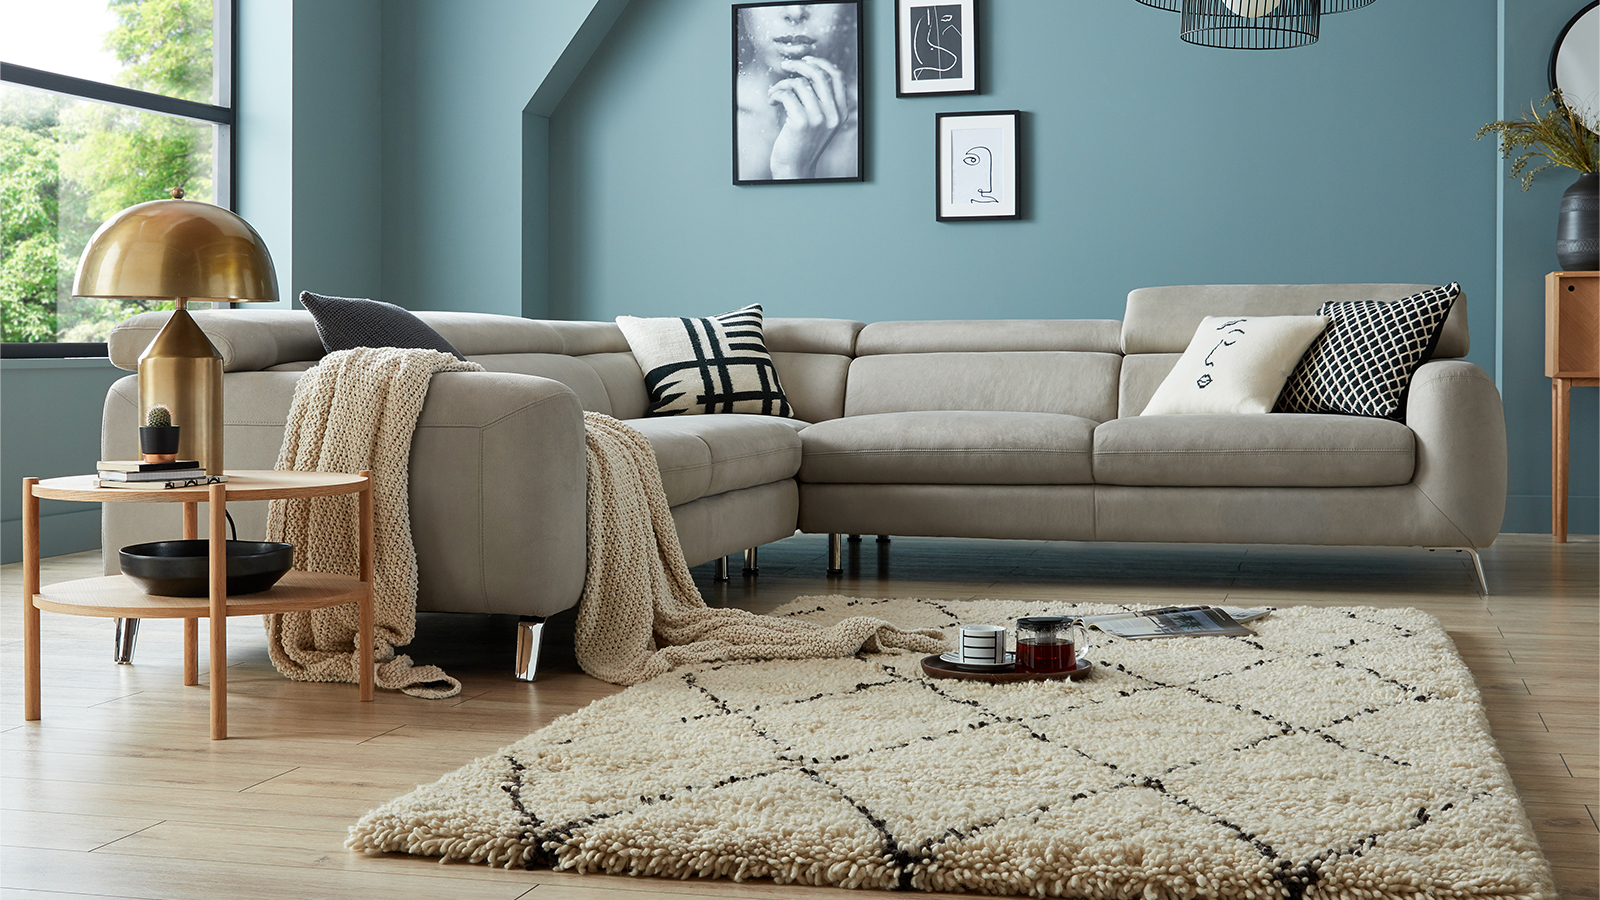 Tips for Choosing a Corner Sofa